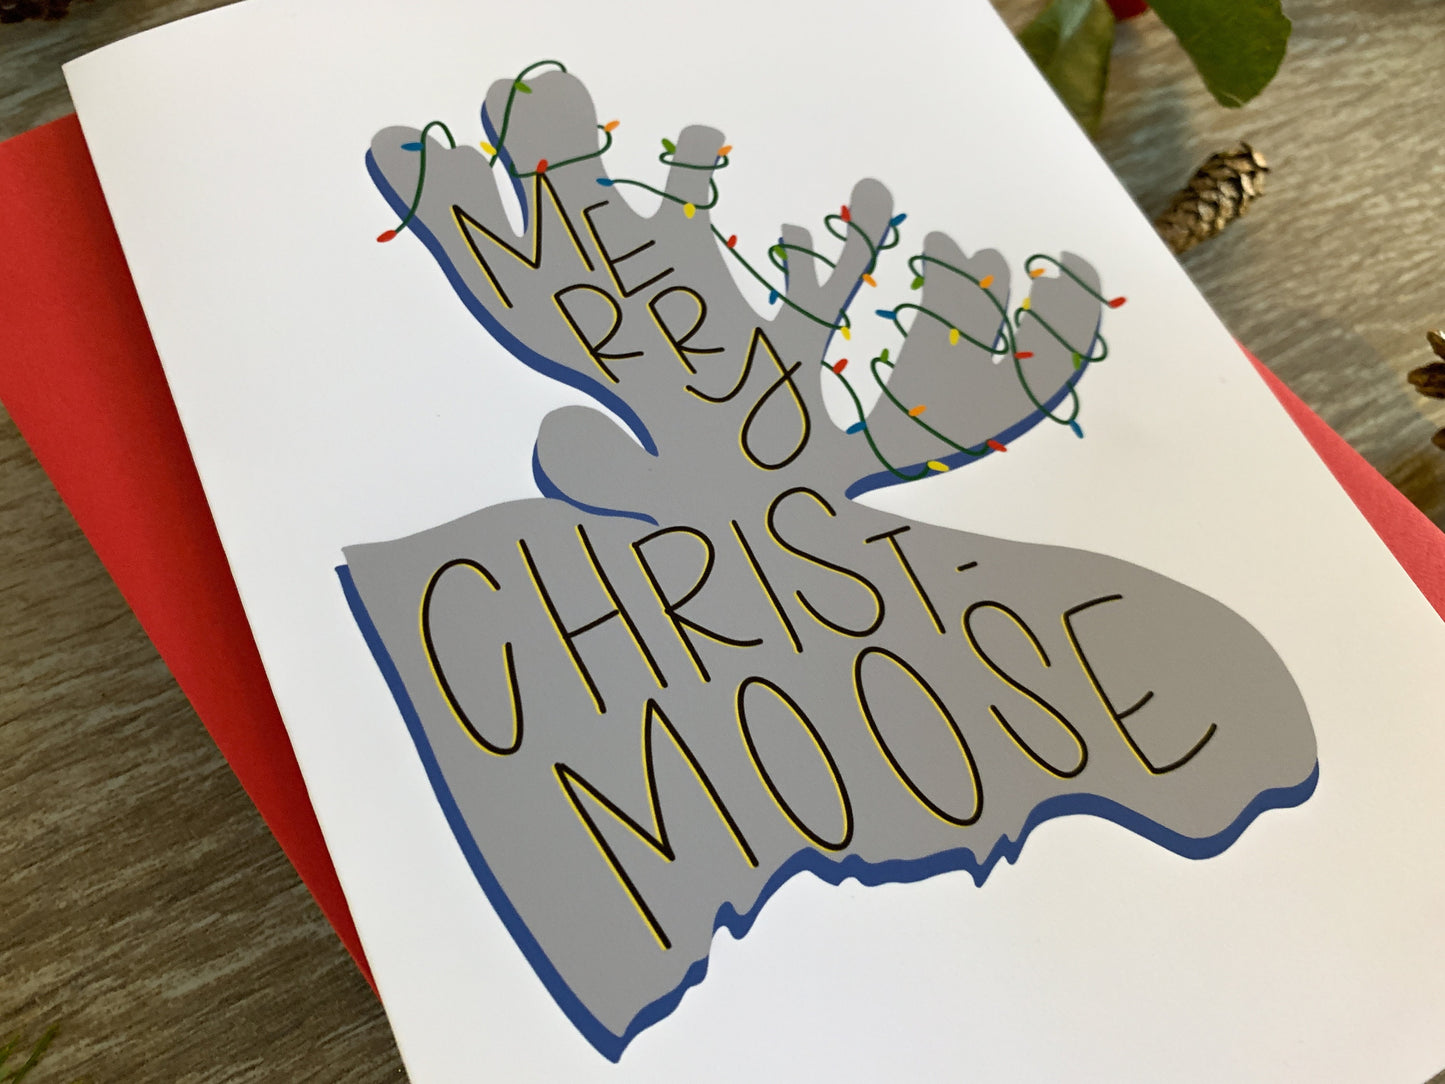 Handmade Merry Christmas Moose Card by StoneDonut Design